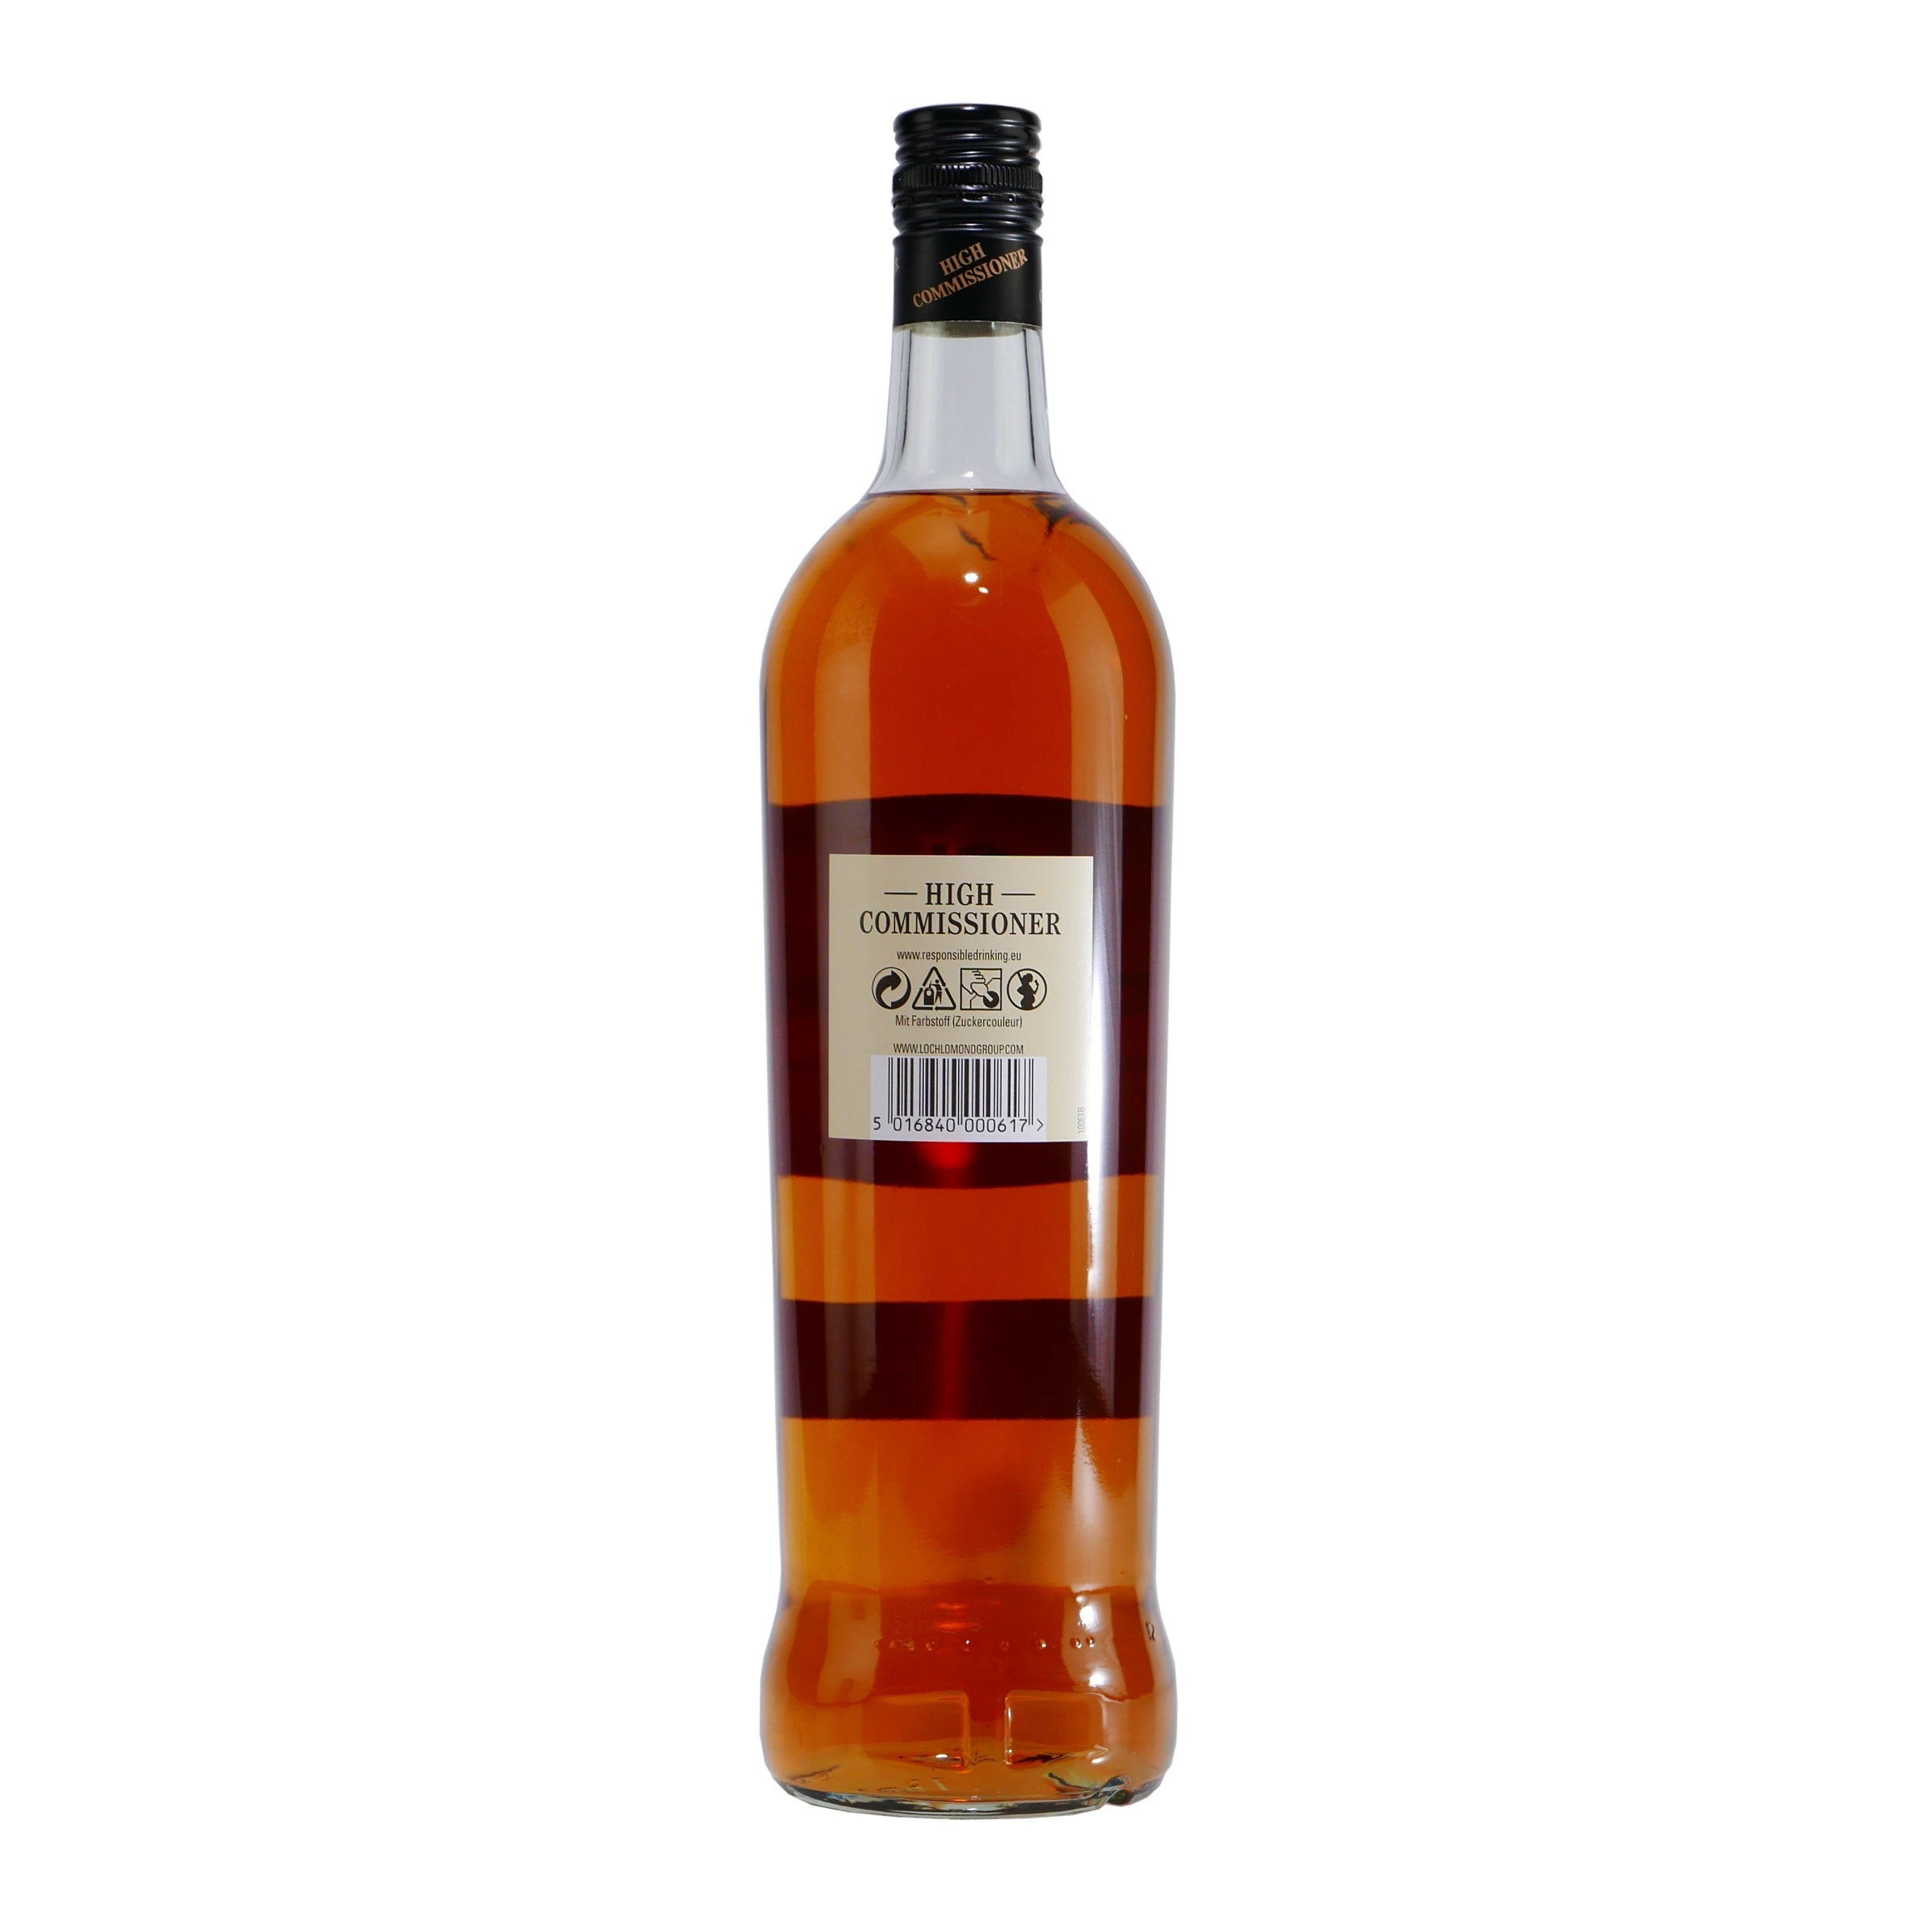 High Commissioner - Blended Scotch Whisky